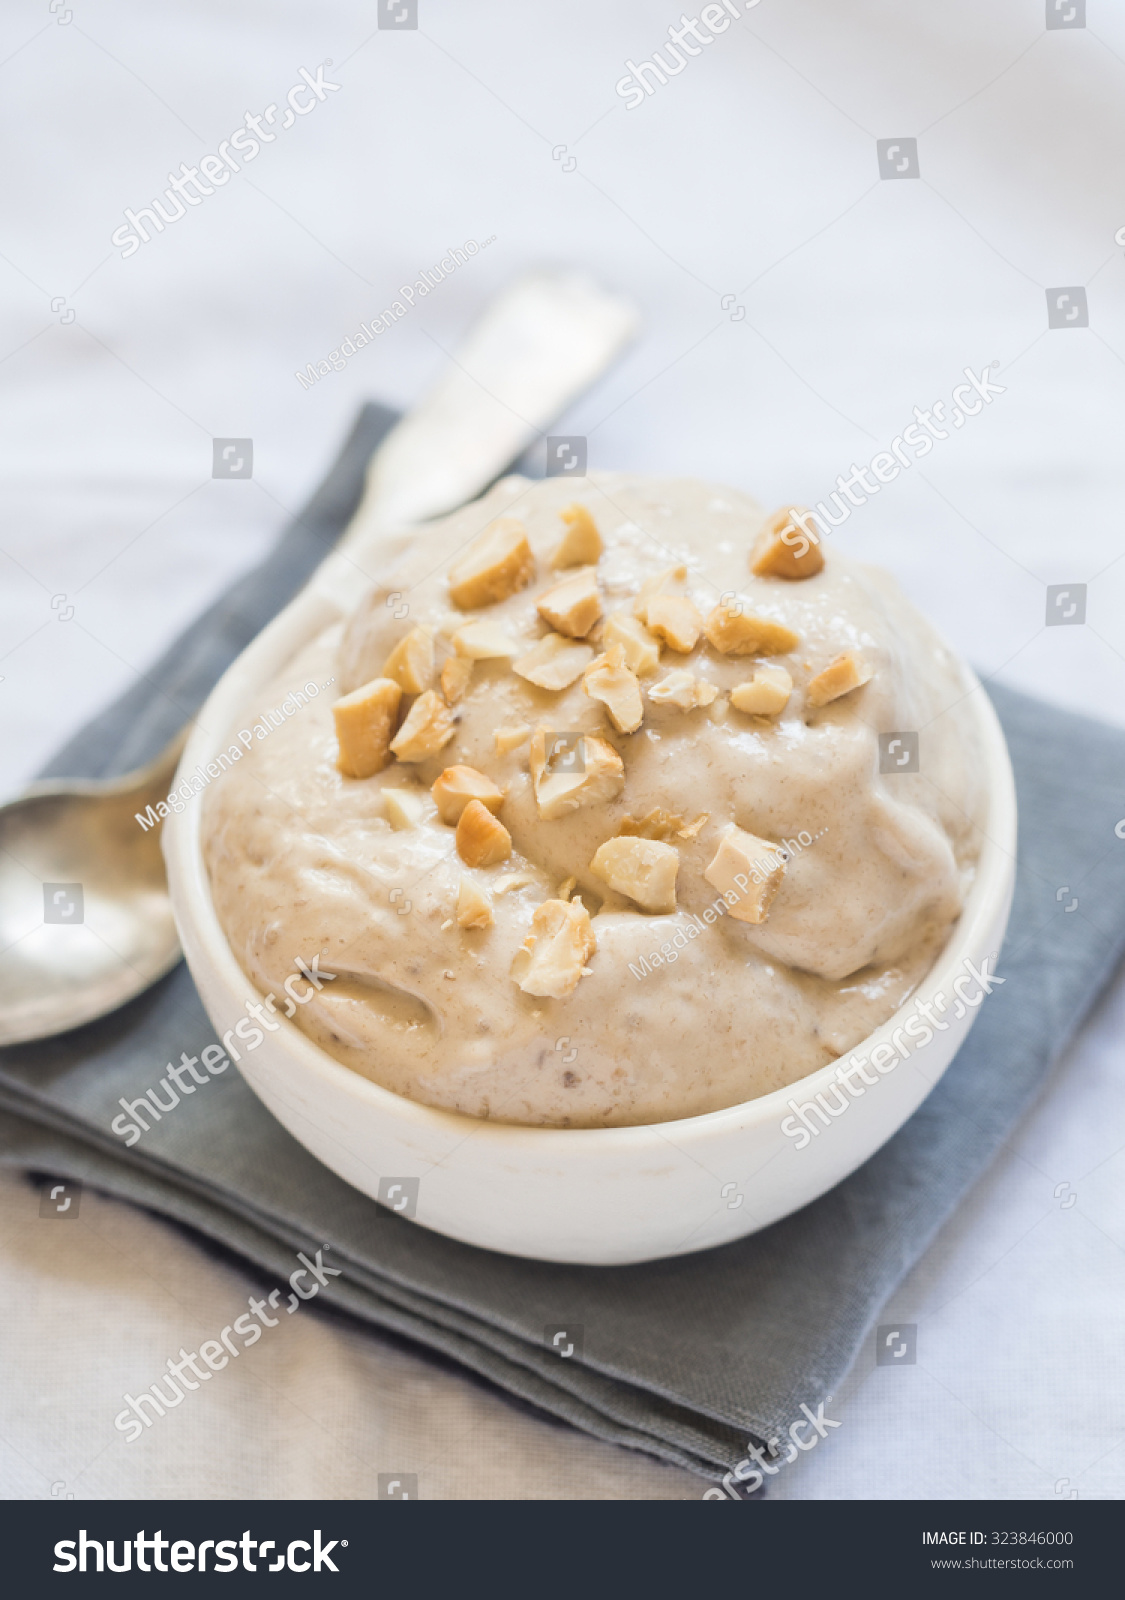 Homemade vegan banana ice cream (here, halva flavored, with tahina) served with cashew nuts. #323846000